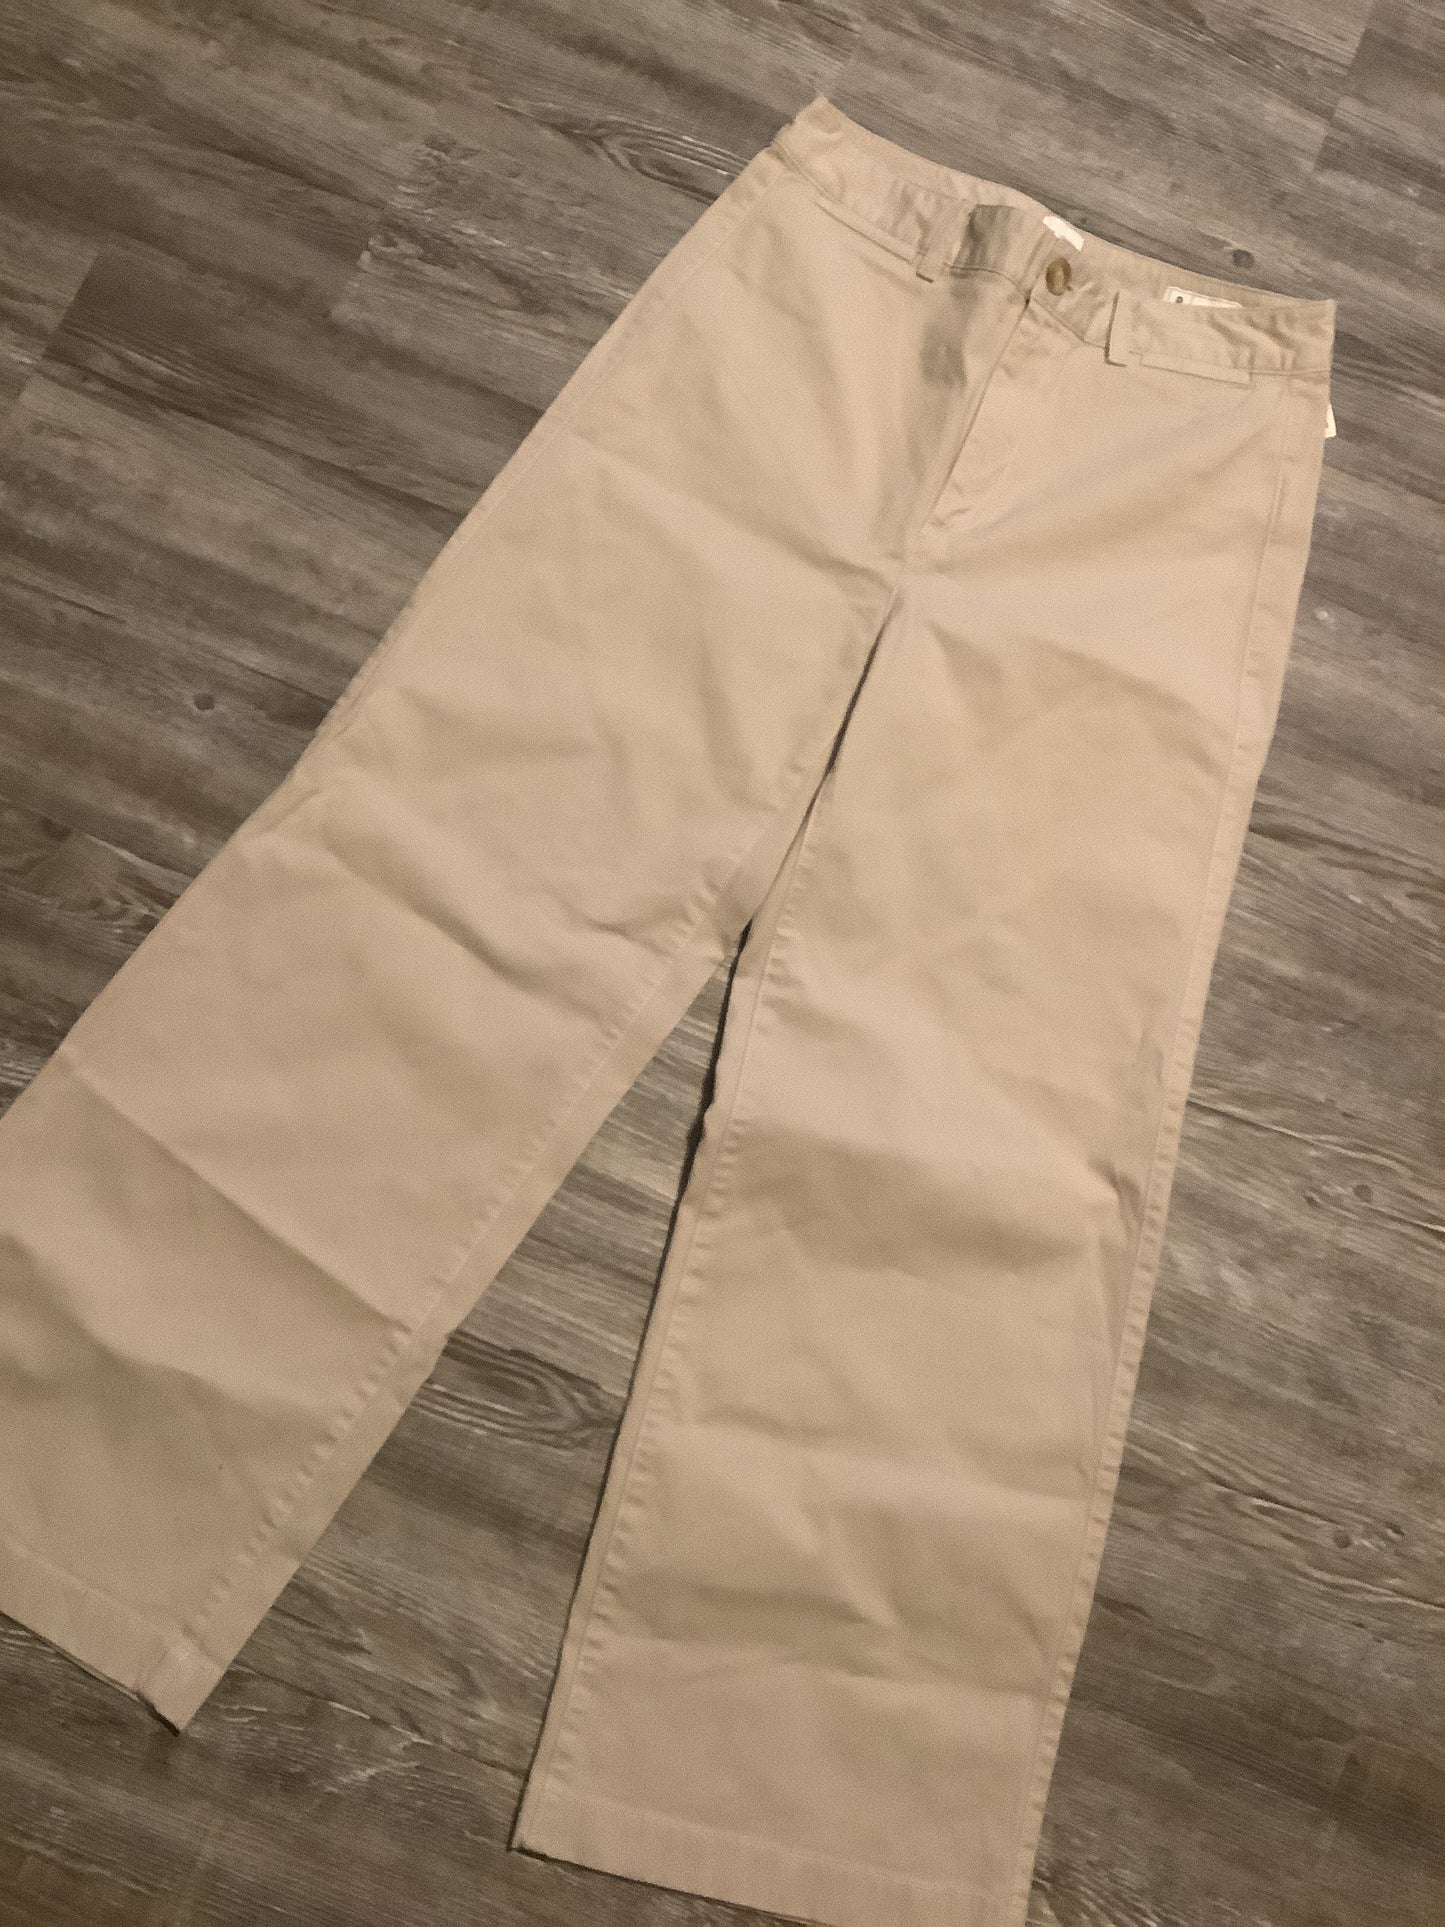 Tan Pants Chinos & Khakis Gap, Size 8